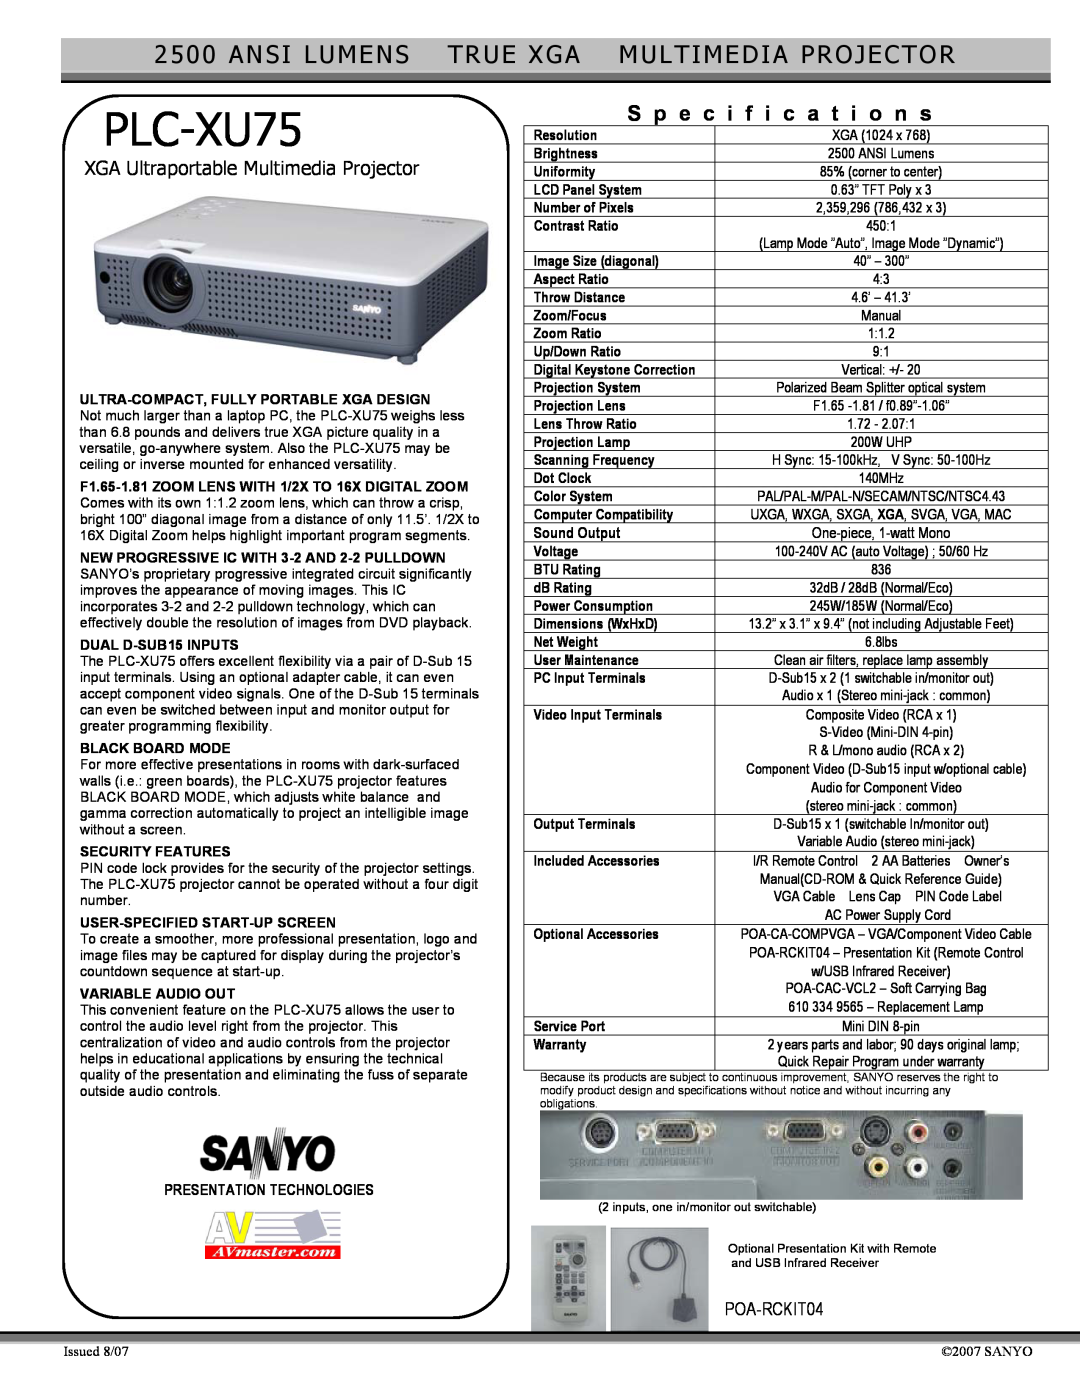 Sanyo PLC-XU75 specifications Ansi Lumens True Xga Multimedia Projector, S p e c i f i c a t i o n s, POA-RCKIT04 